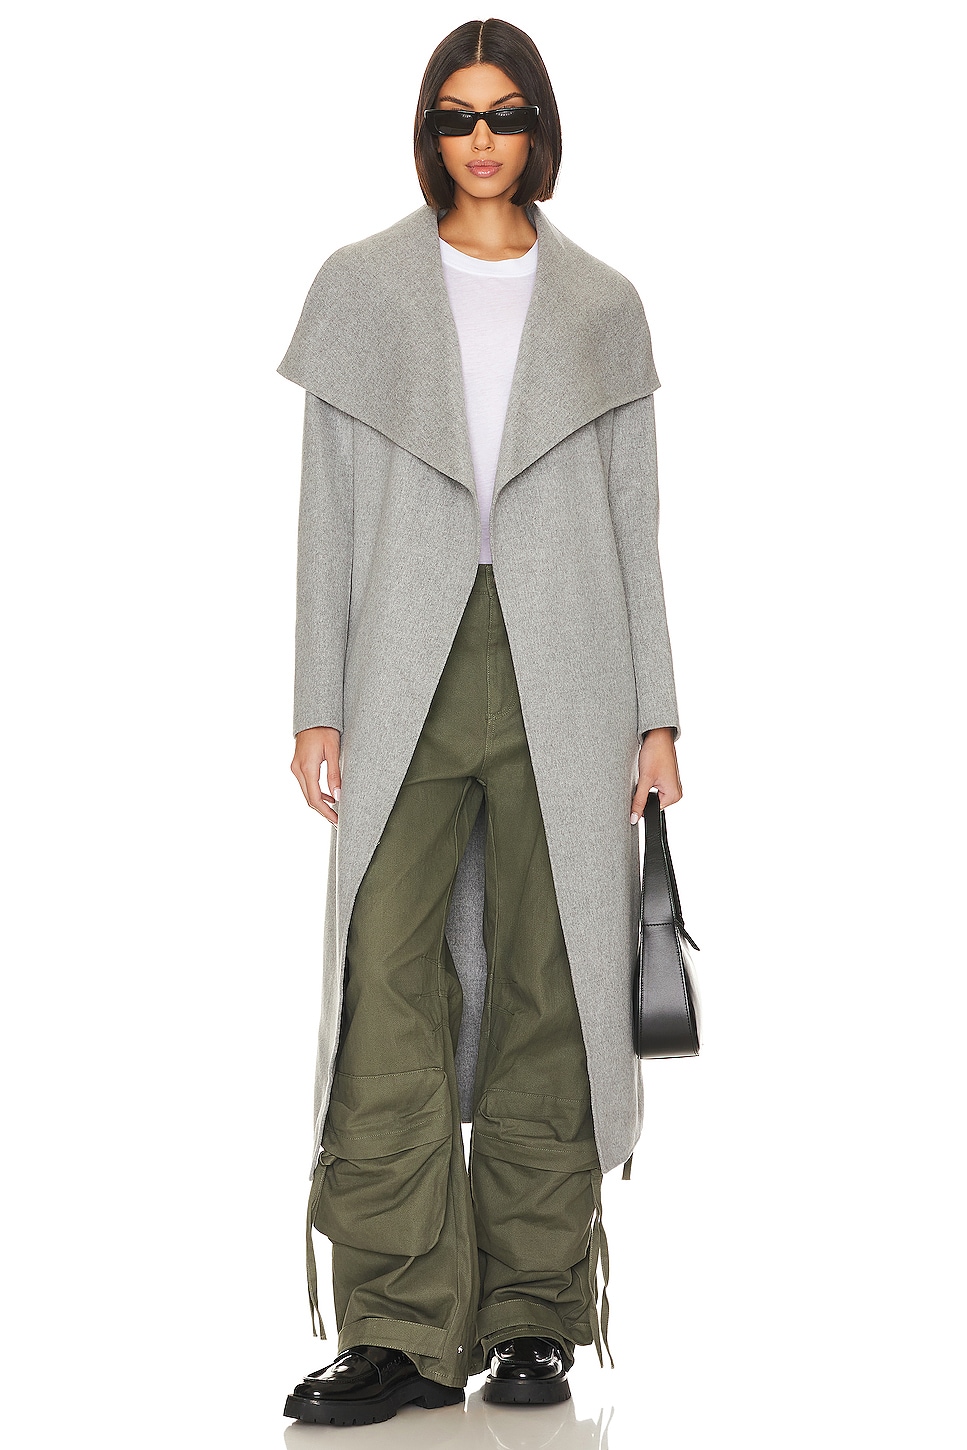 Mackage Mai Wool Coat in Grey Melange | REVOLVE